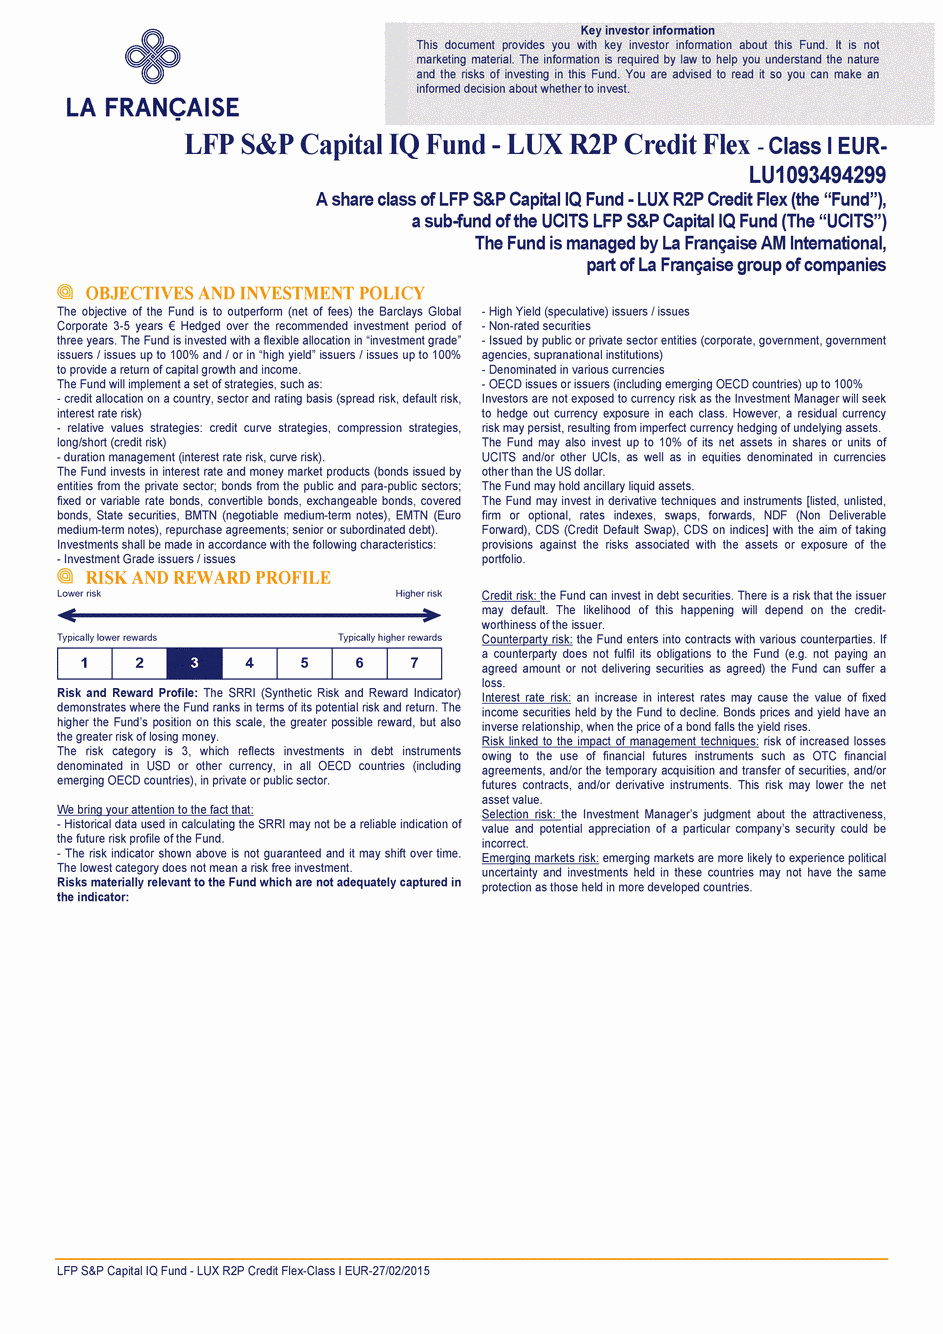 DICI LFP S&P Capital IQ Fund - LUX R2P Credit Flex I CAP EUR - 27/02/2015 - Anglais